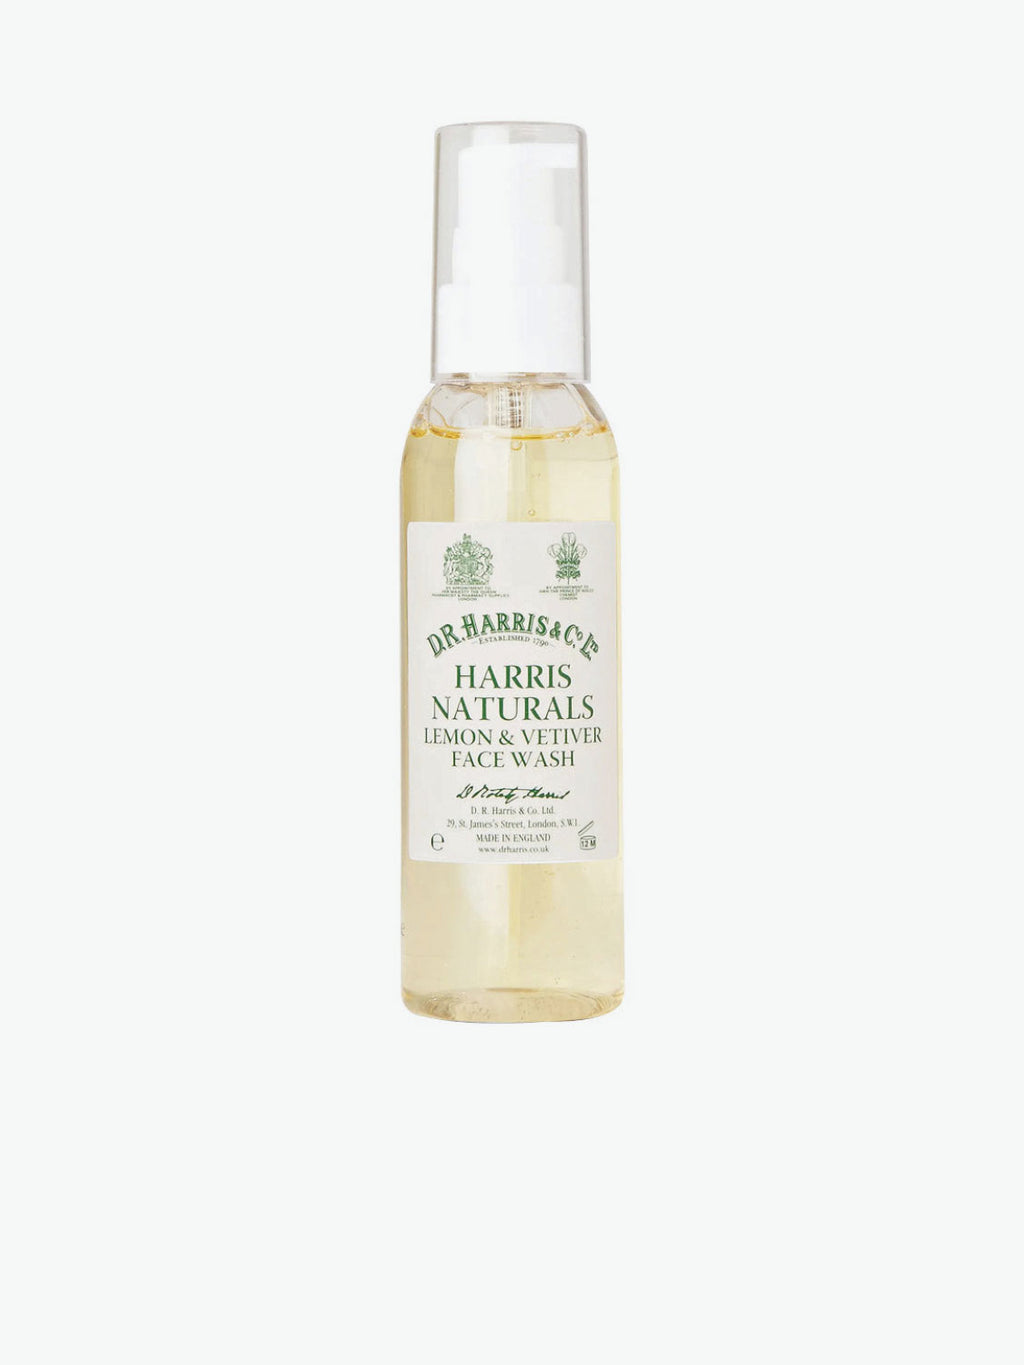 D.R. Harris Naturals Lemon and Vetiver Face Wash | A